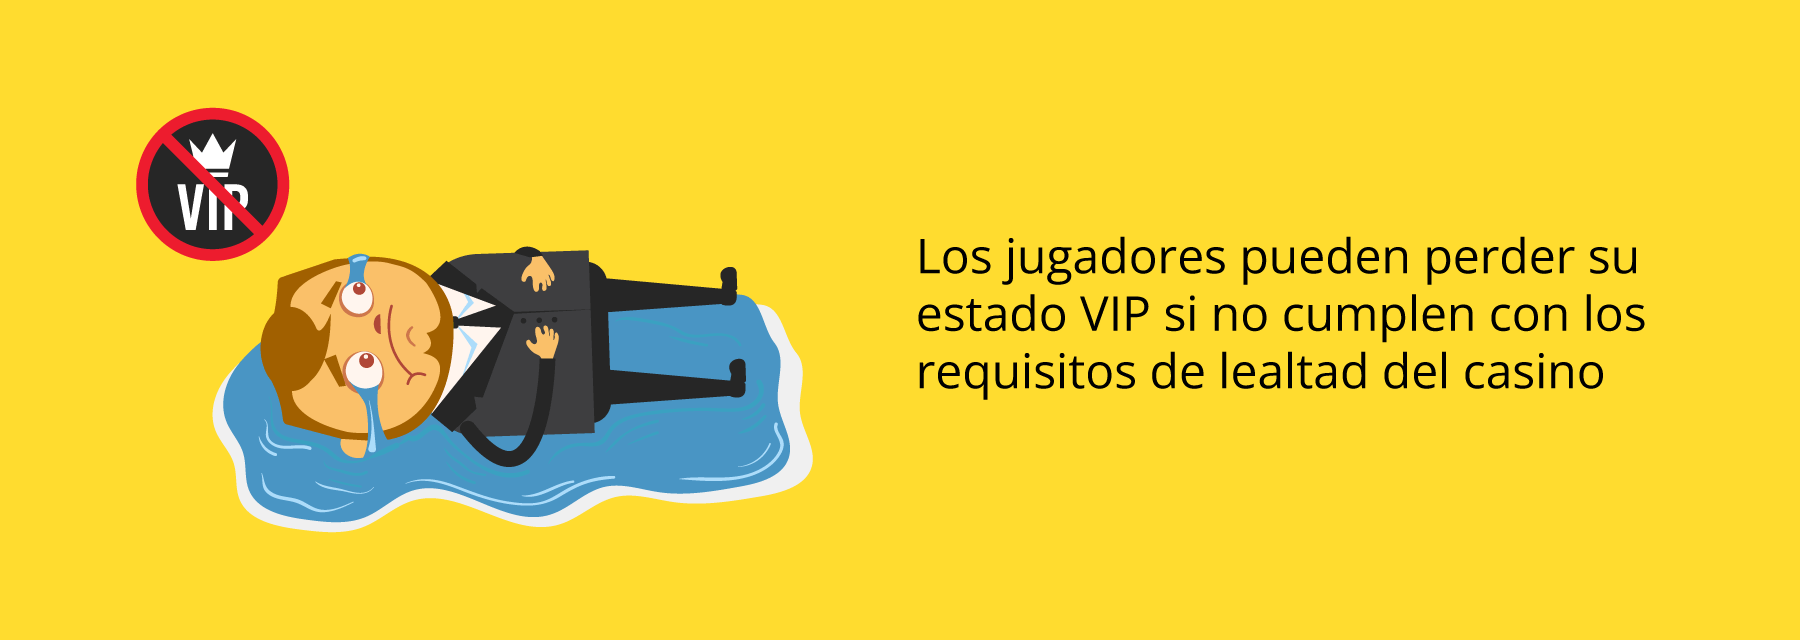 Ruleta VIP en español con bonos